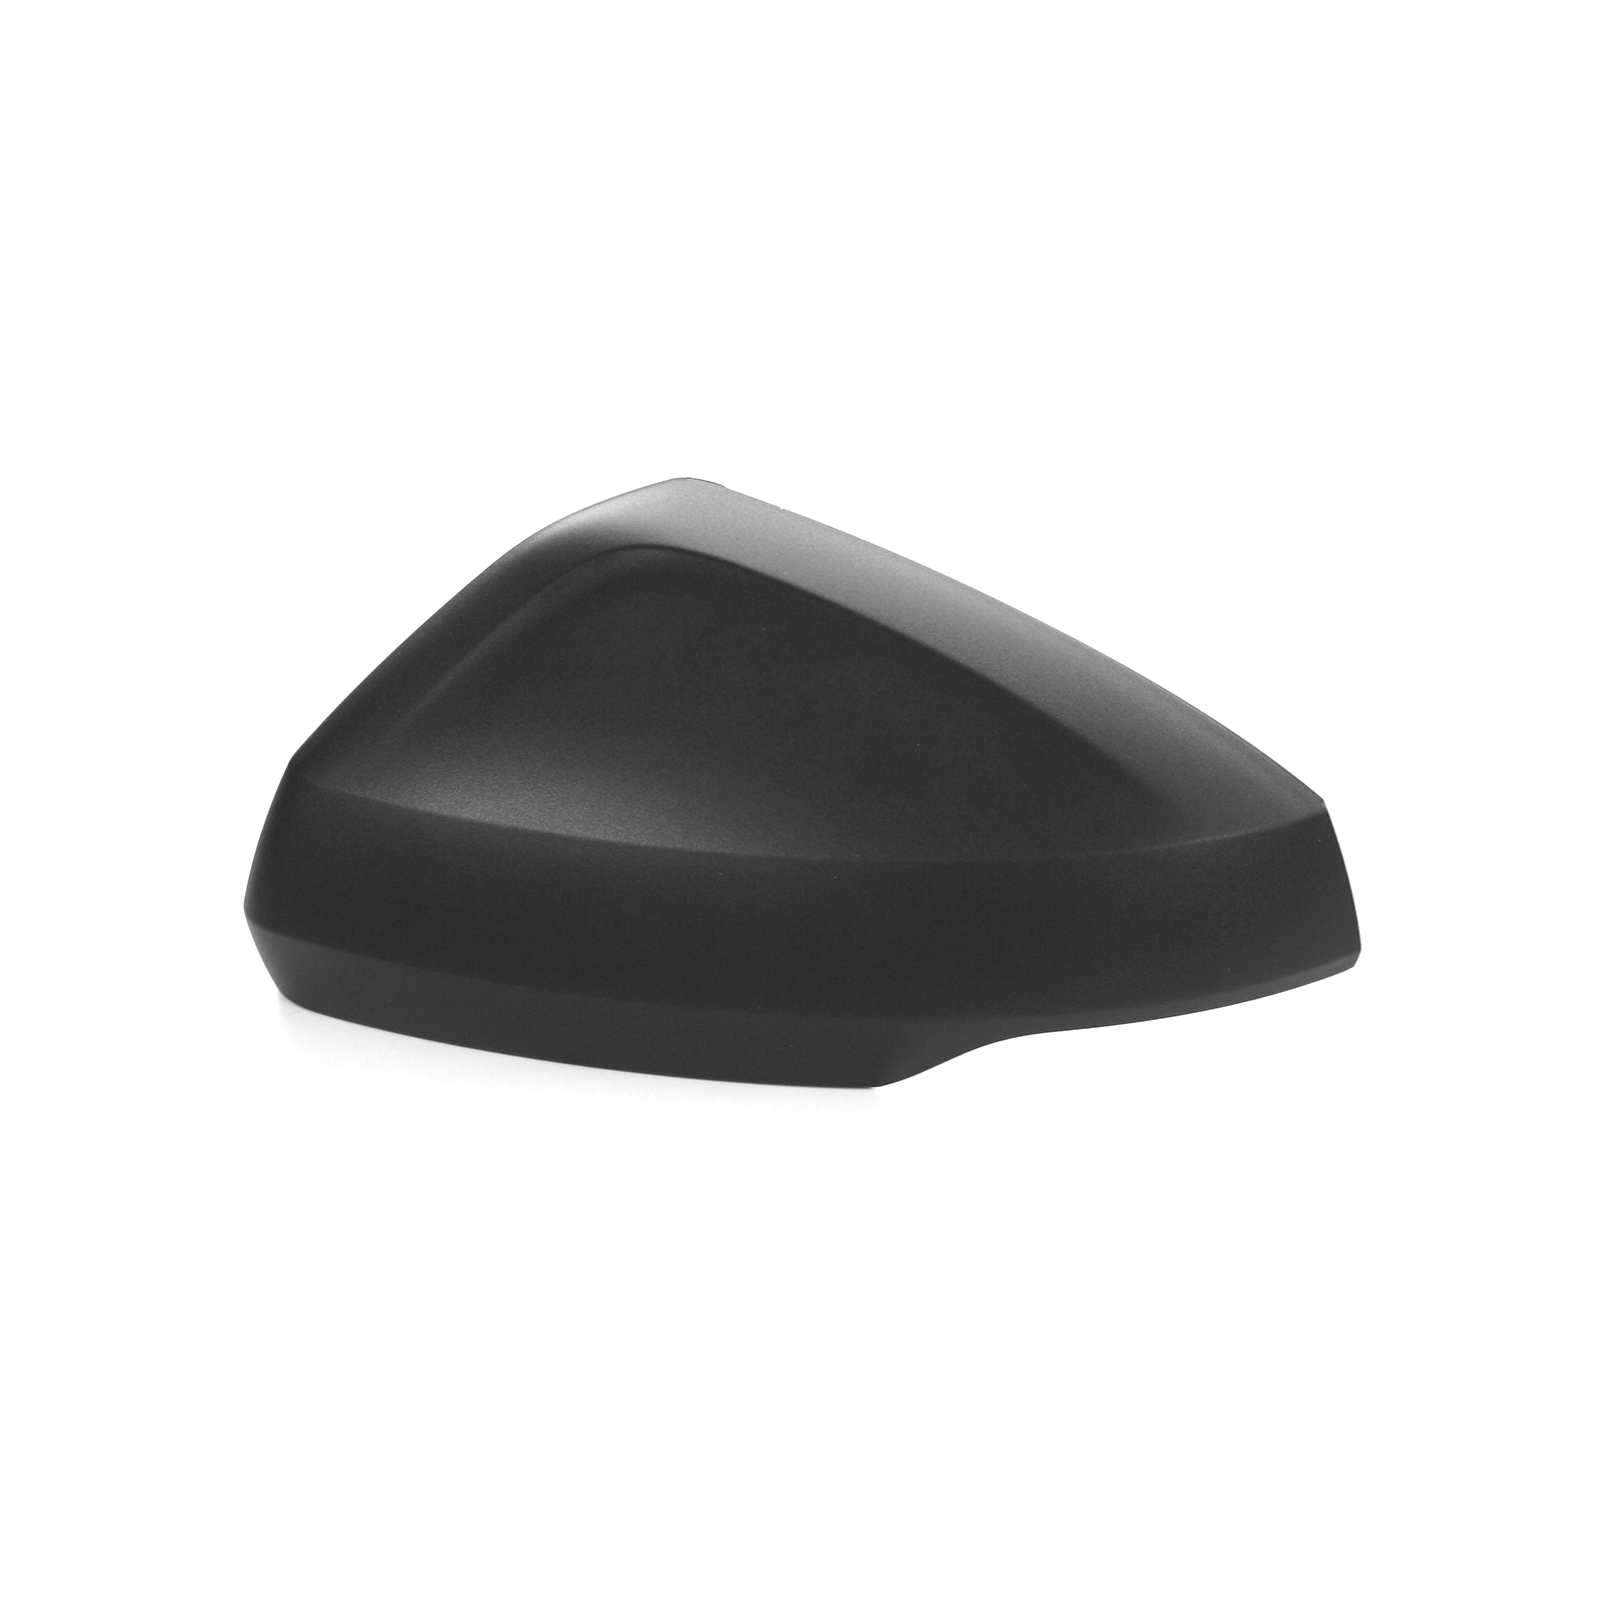 Glänzend schwarz autos piegel abdeckung für audi a3 8p a4 a5 b8 q3 a6 c6 4f  s6 rückspiegel abdeckung schutz kappe shell auto styling